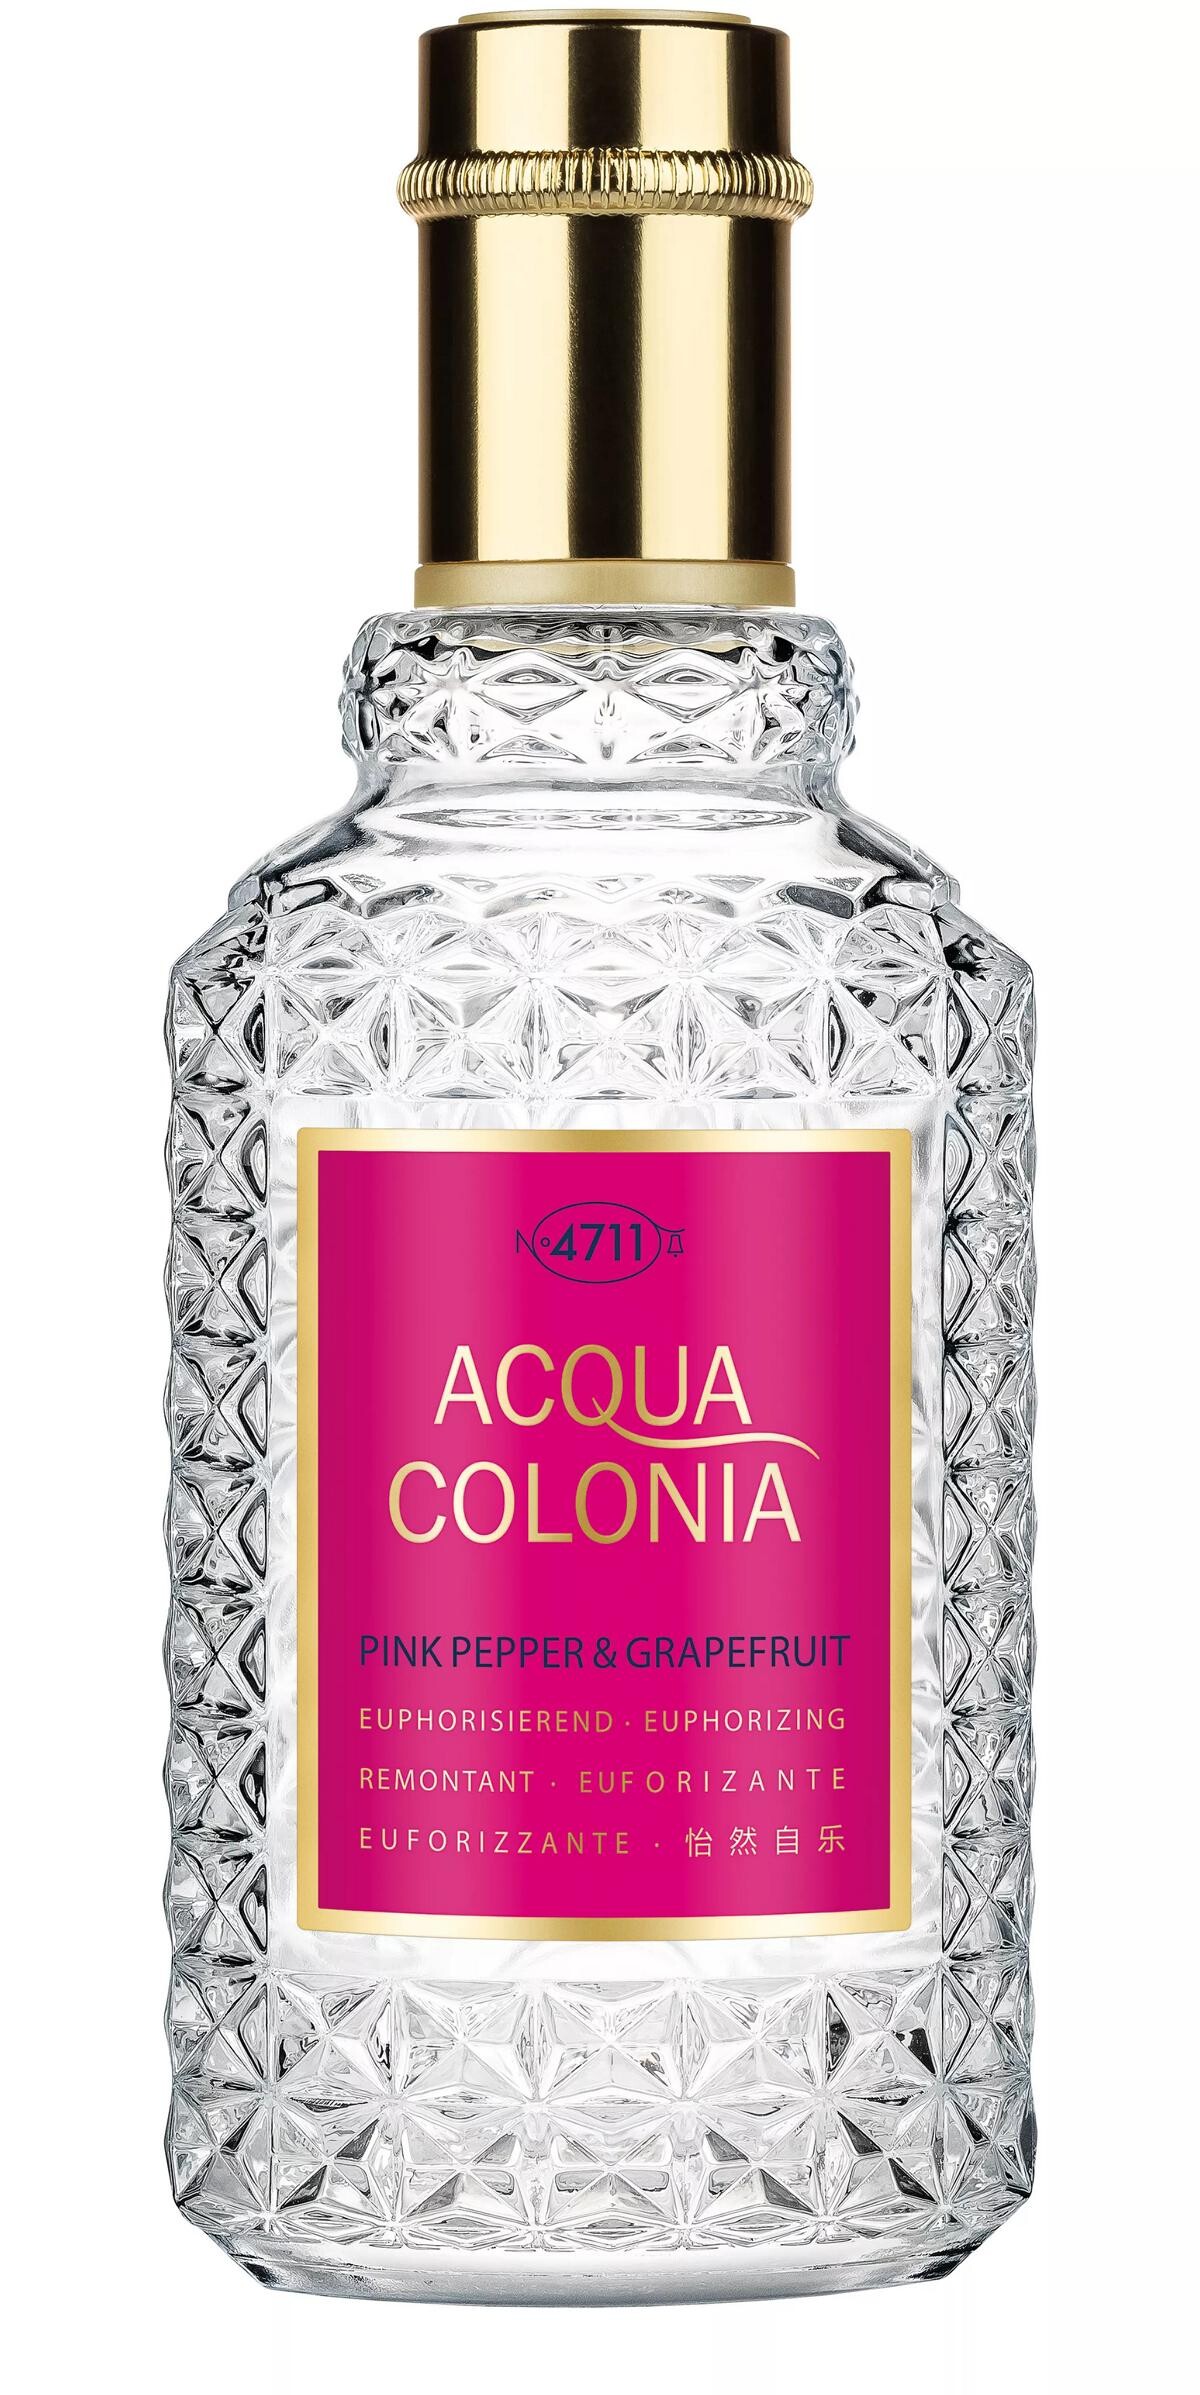 4711 Acqua Colonia 4711 Acqua Colonia Pink Pepper und bestellen